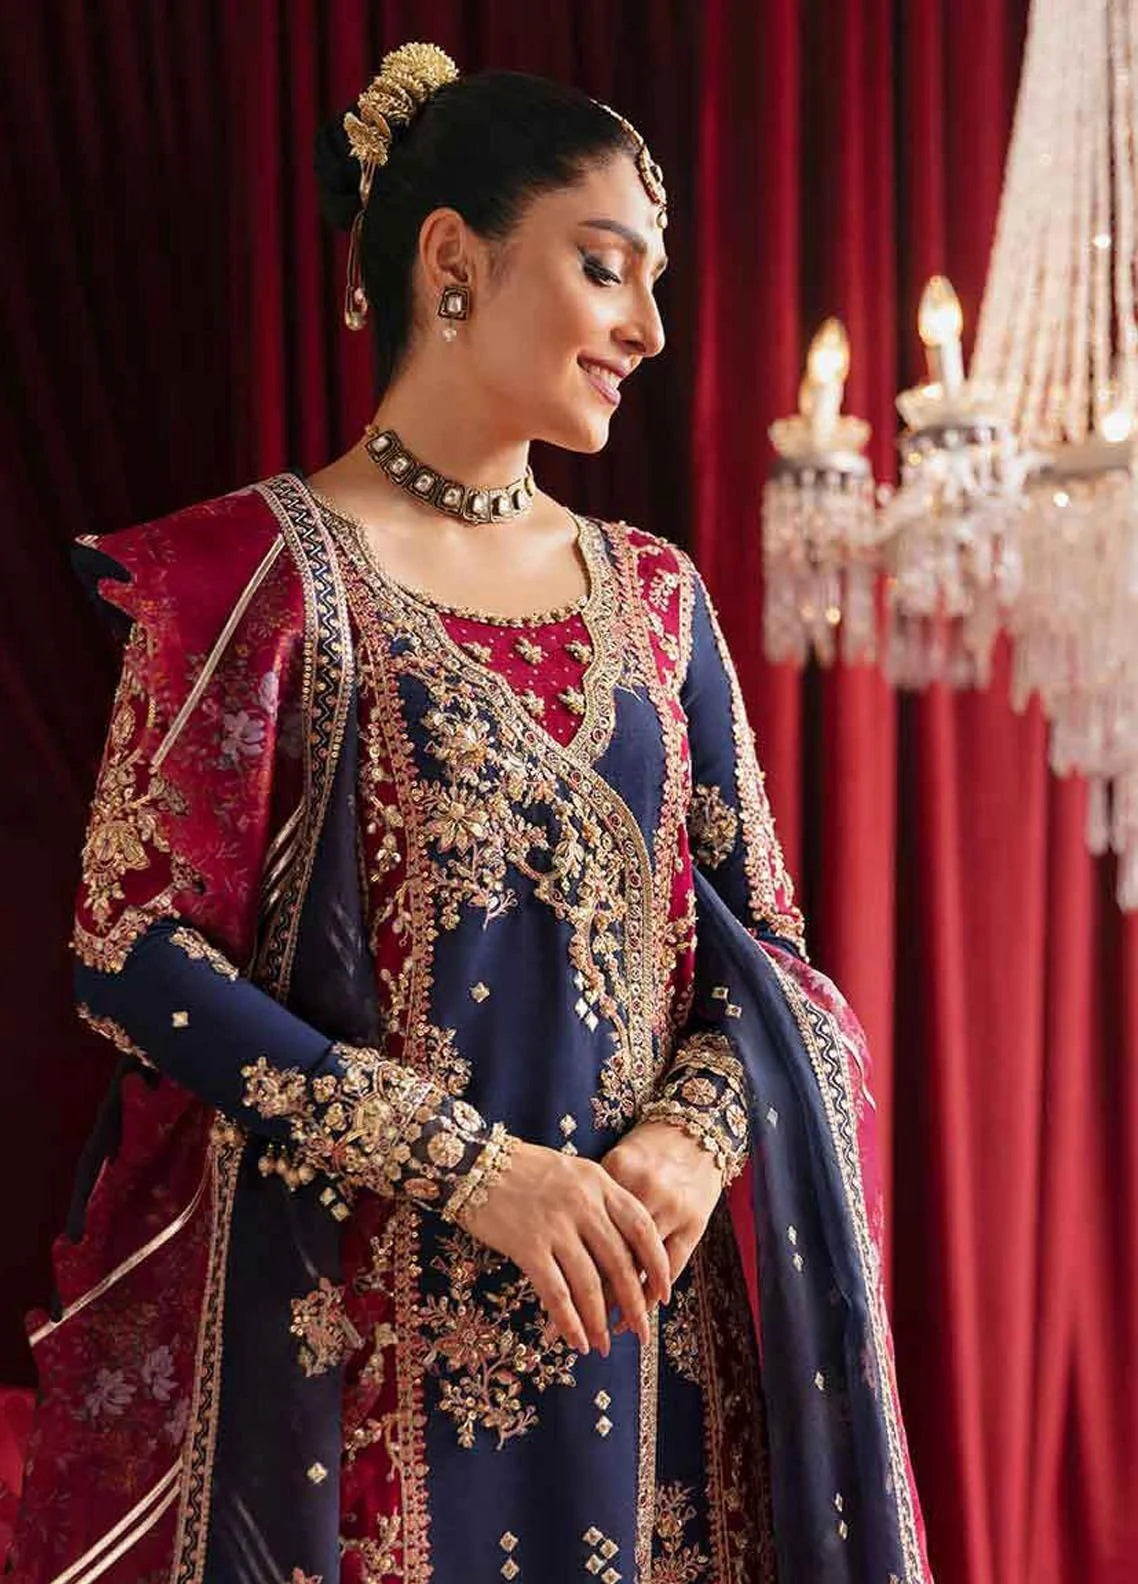 Qalamkar Formal Meharbano Inspired Embroidered 3 Piece Wedding Outfit - Desi Posh